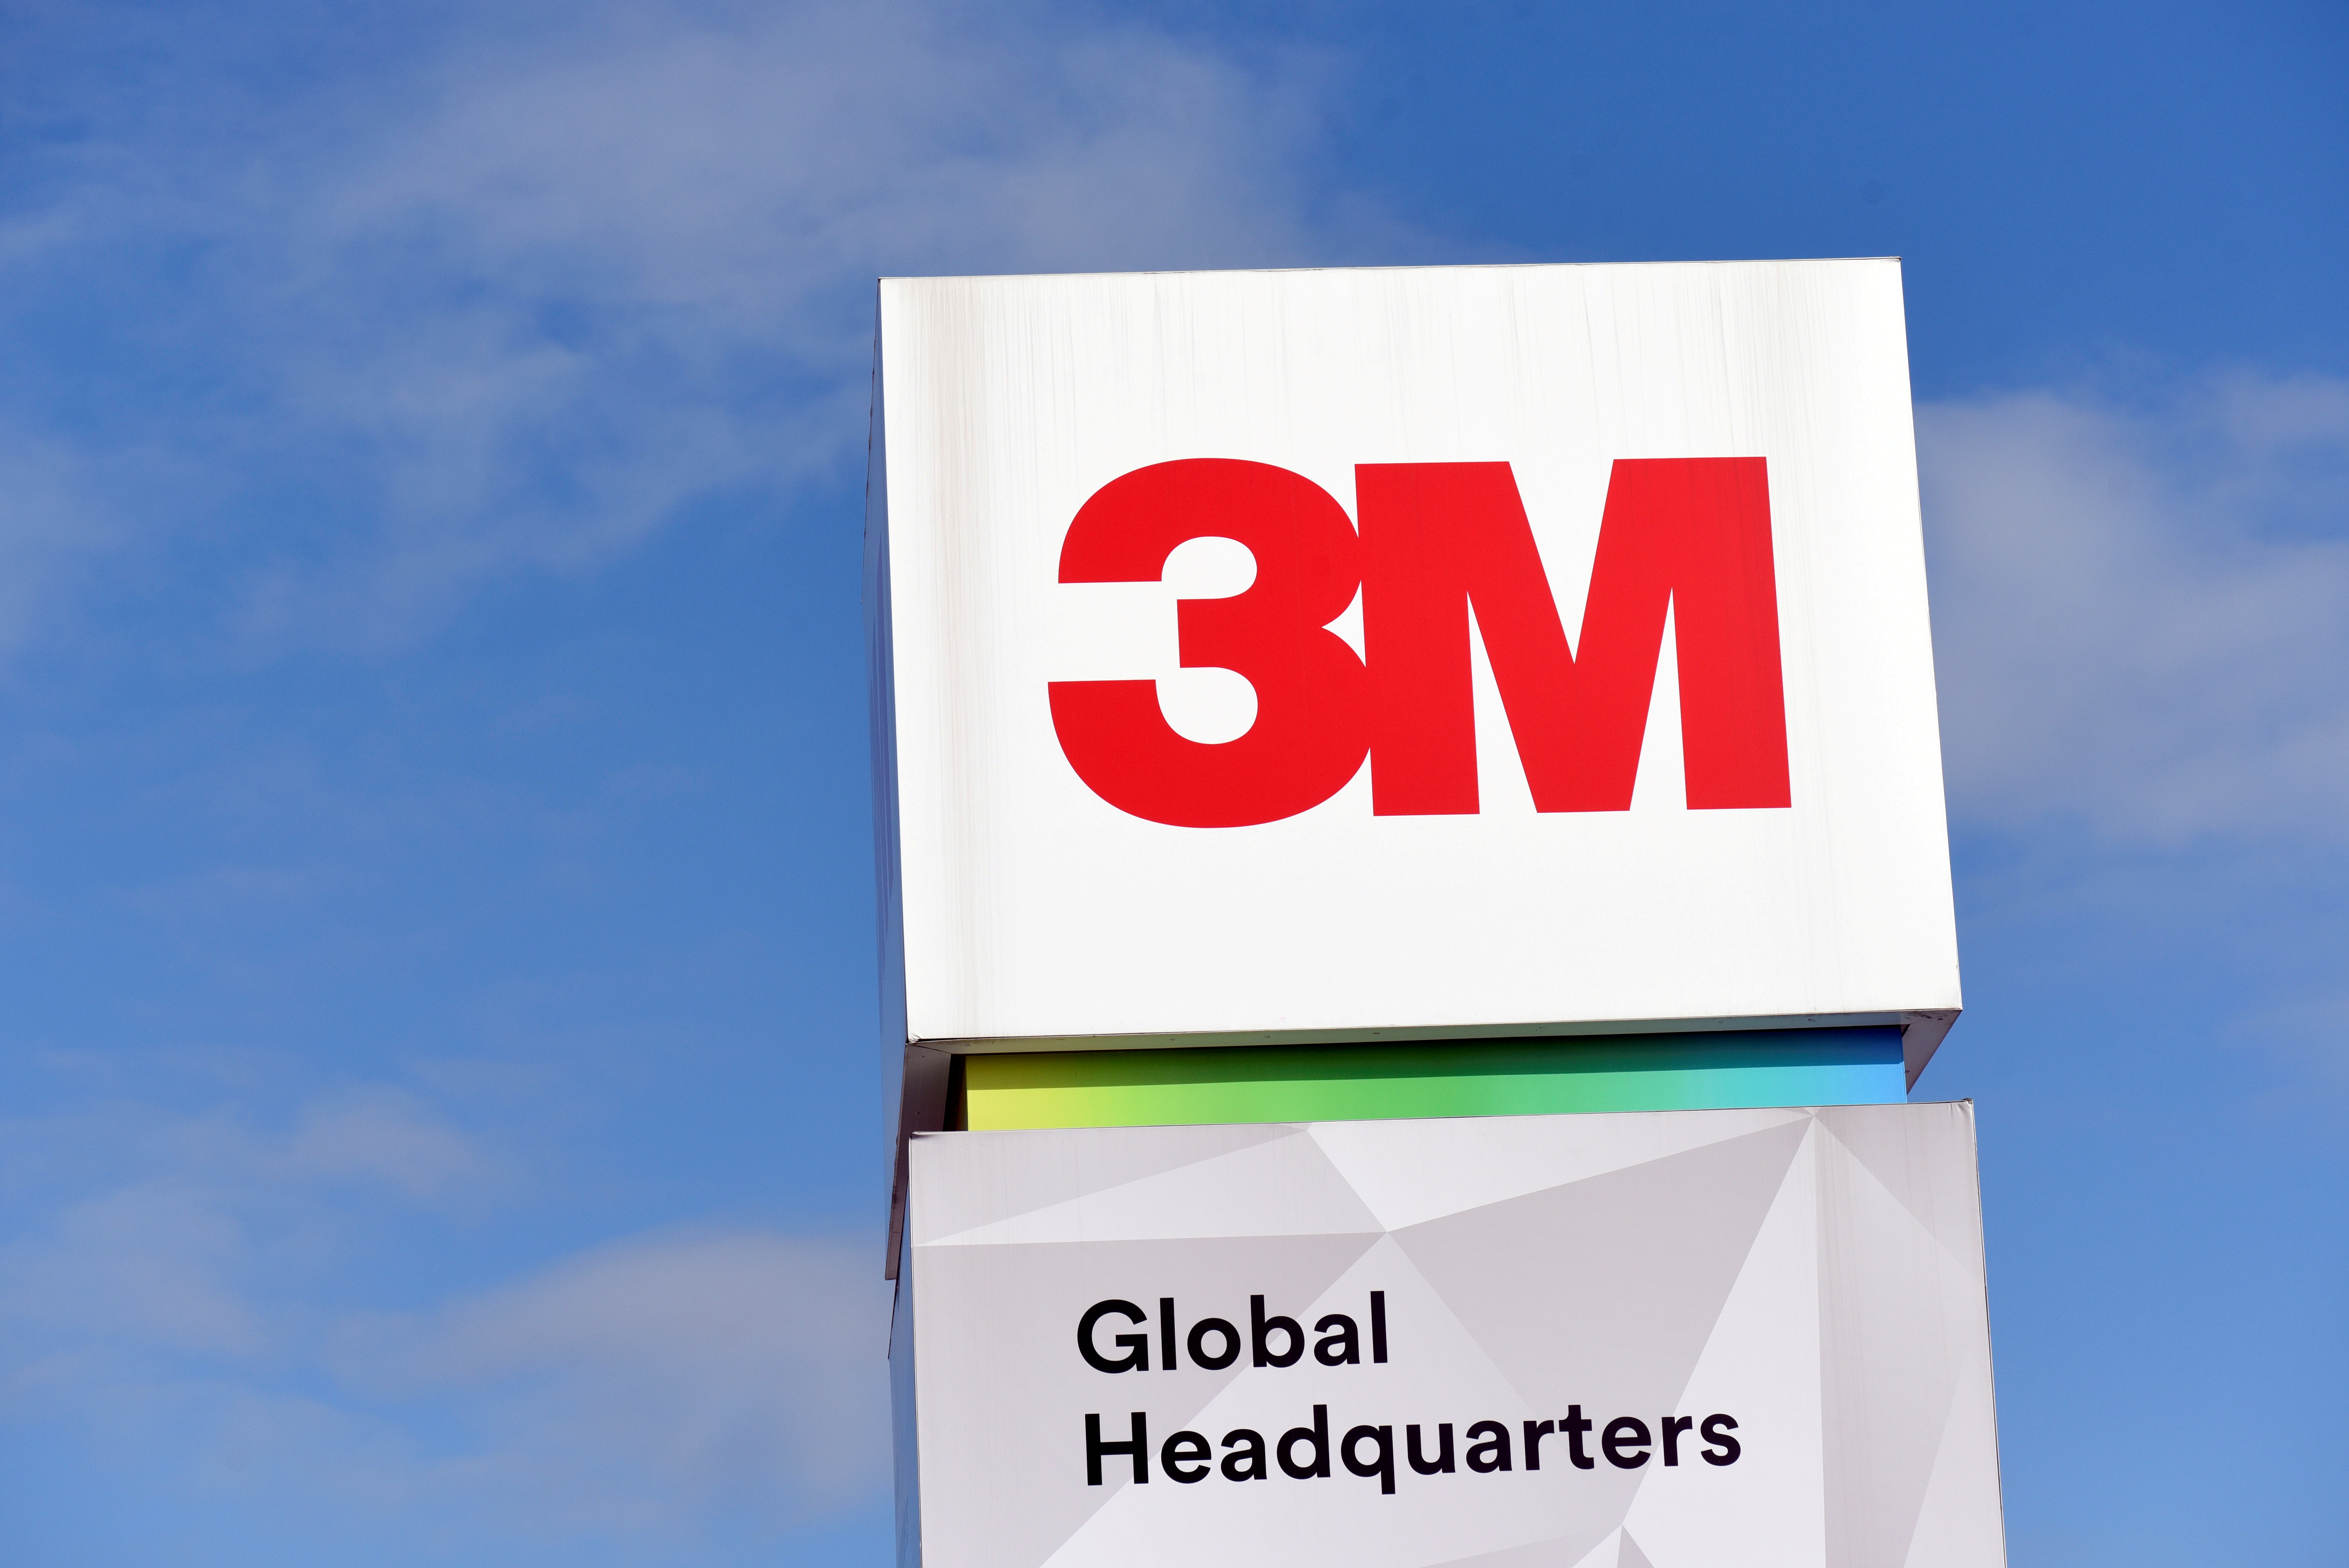 The 3M logo is seen at its global headquarters in Maplewood, Minnesota, U.S. on March 4, 2020.  REUTERS/Nicholas Pfosi